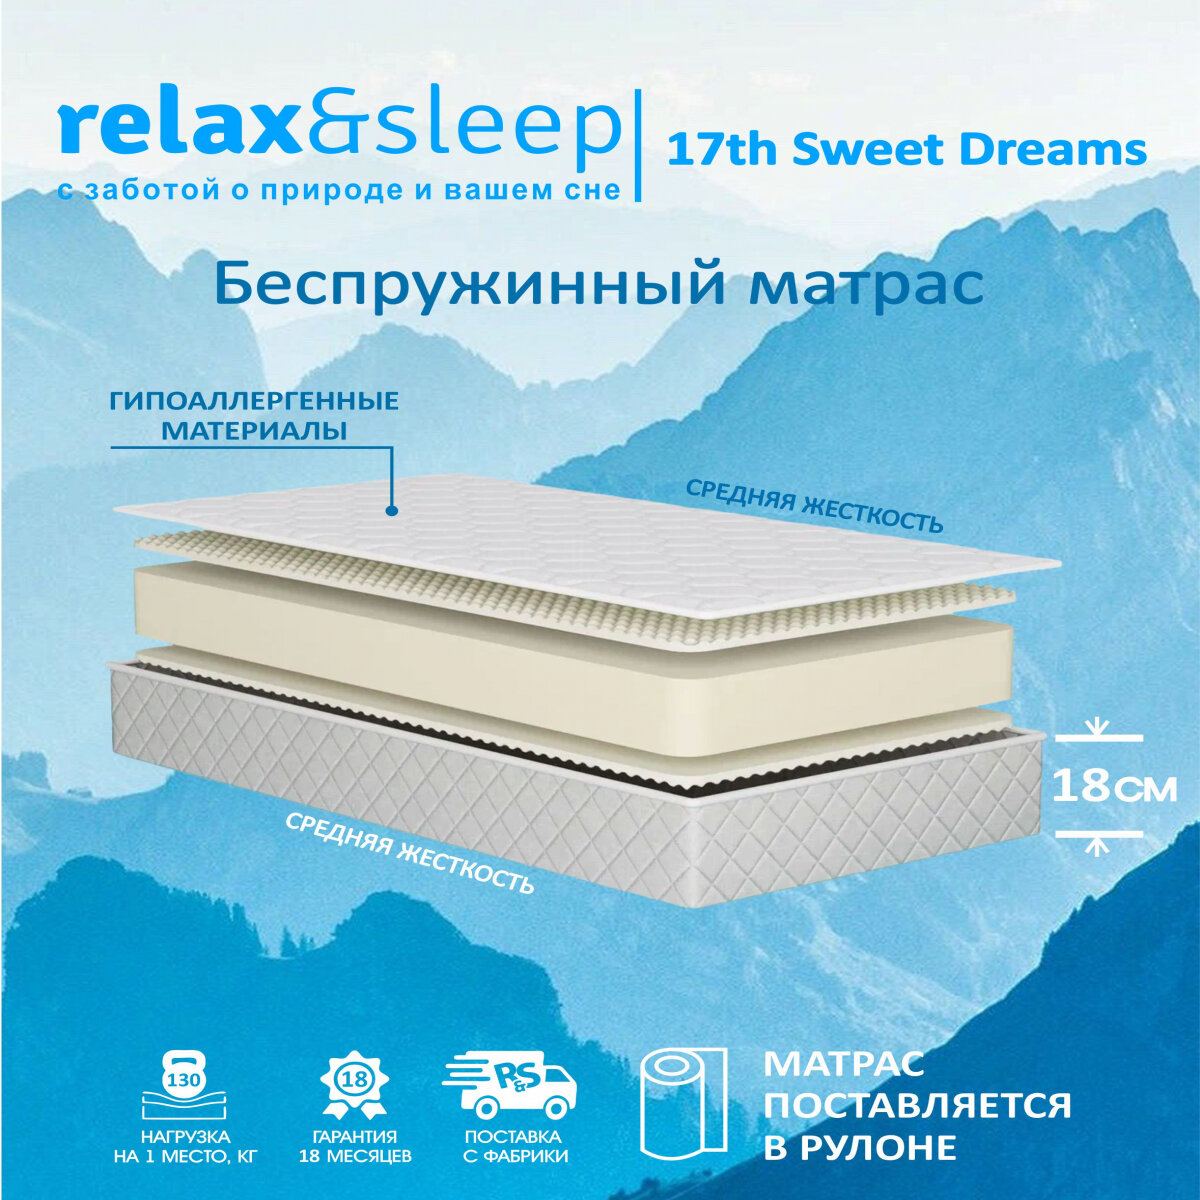 Матрас Relax&Sleep ортопедический беспружинный 17th Sweet Dreams (80 / 185)